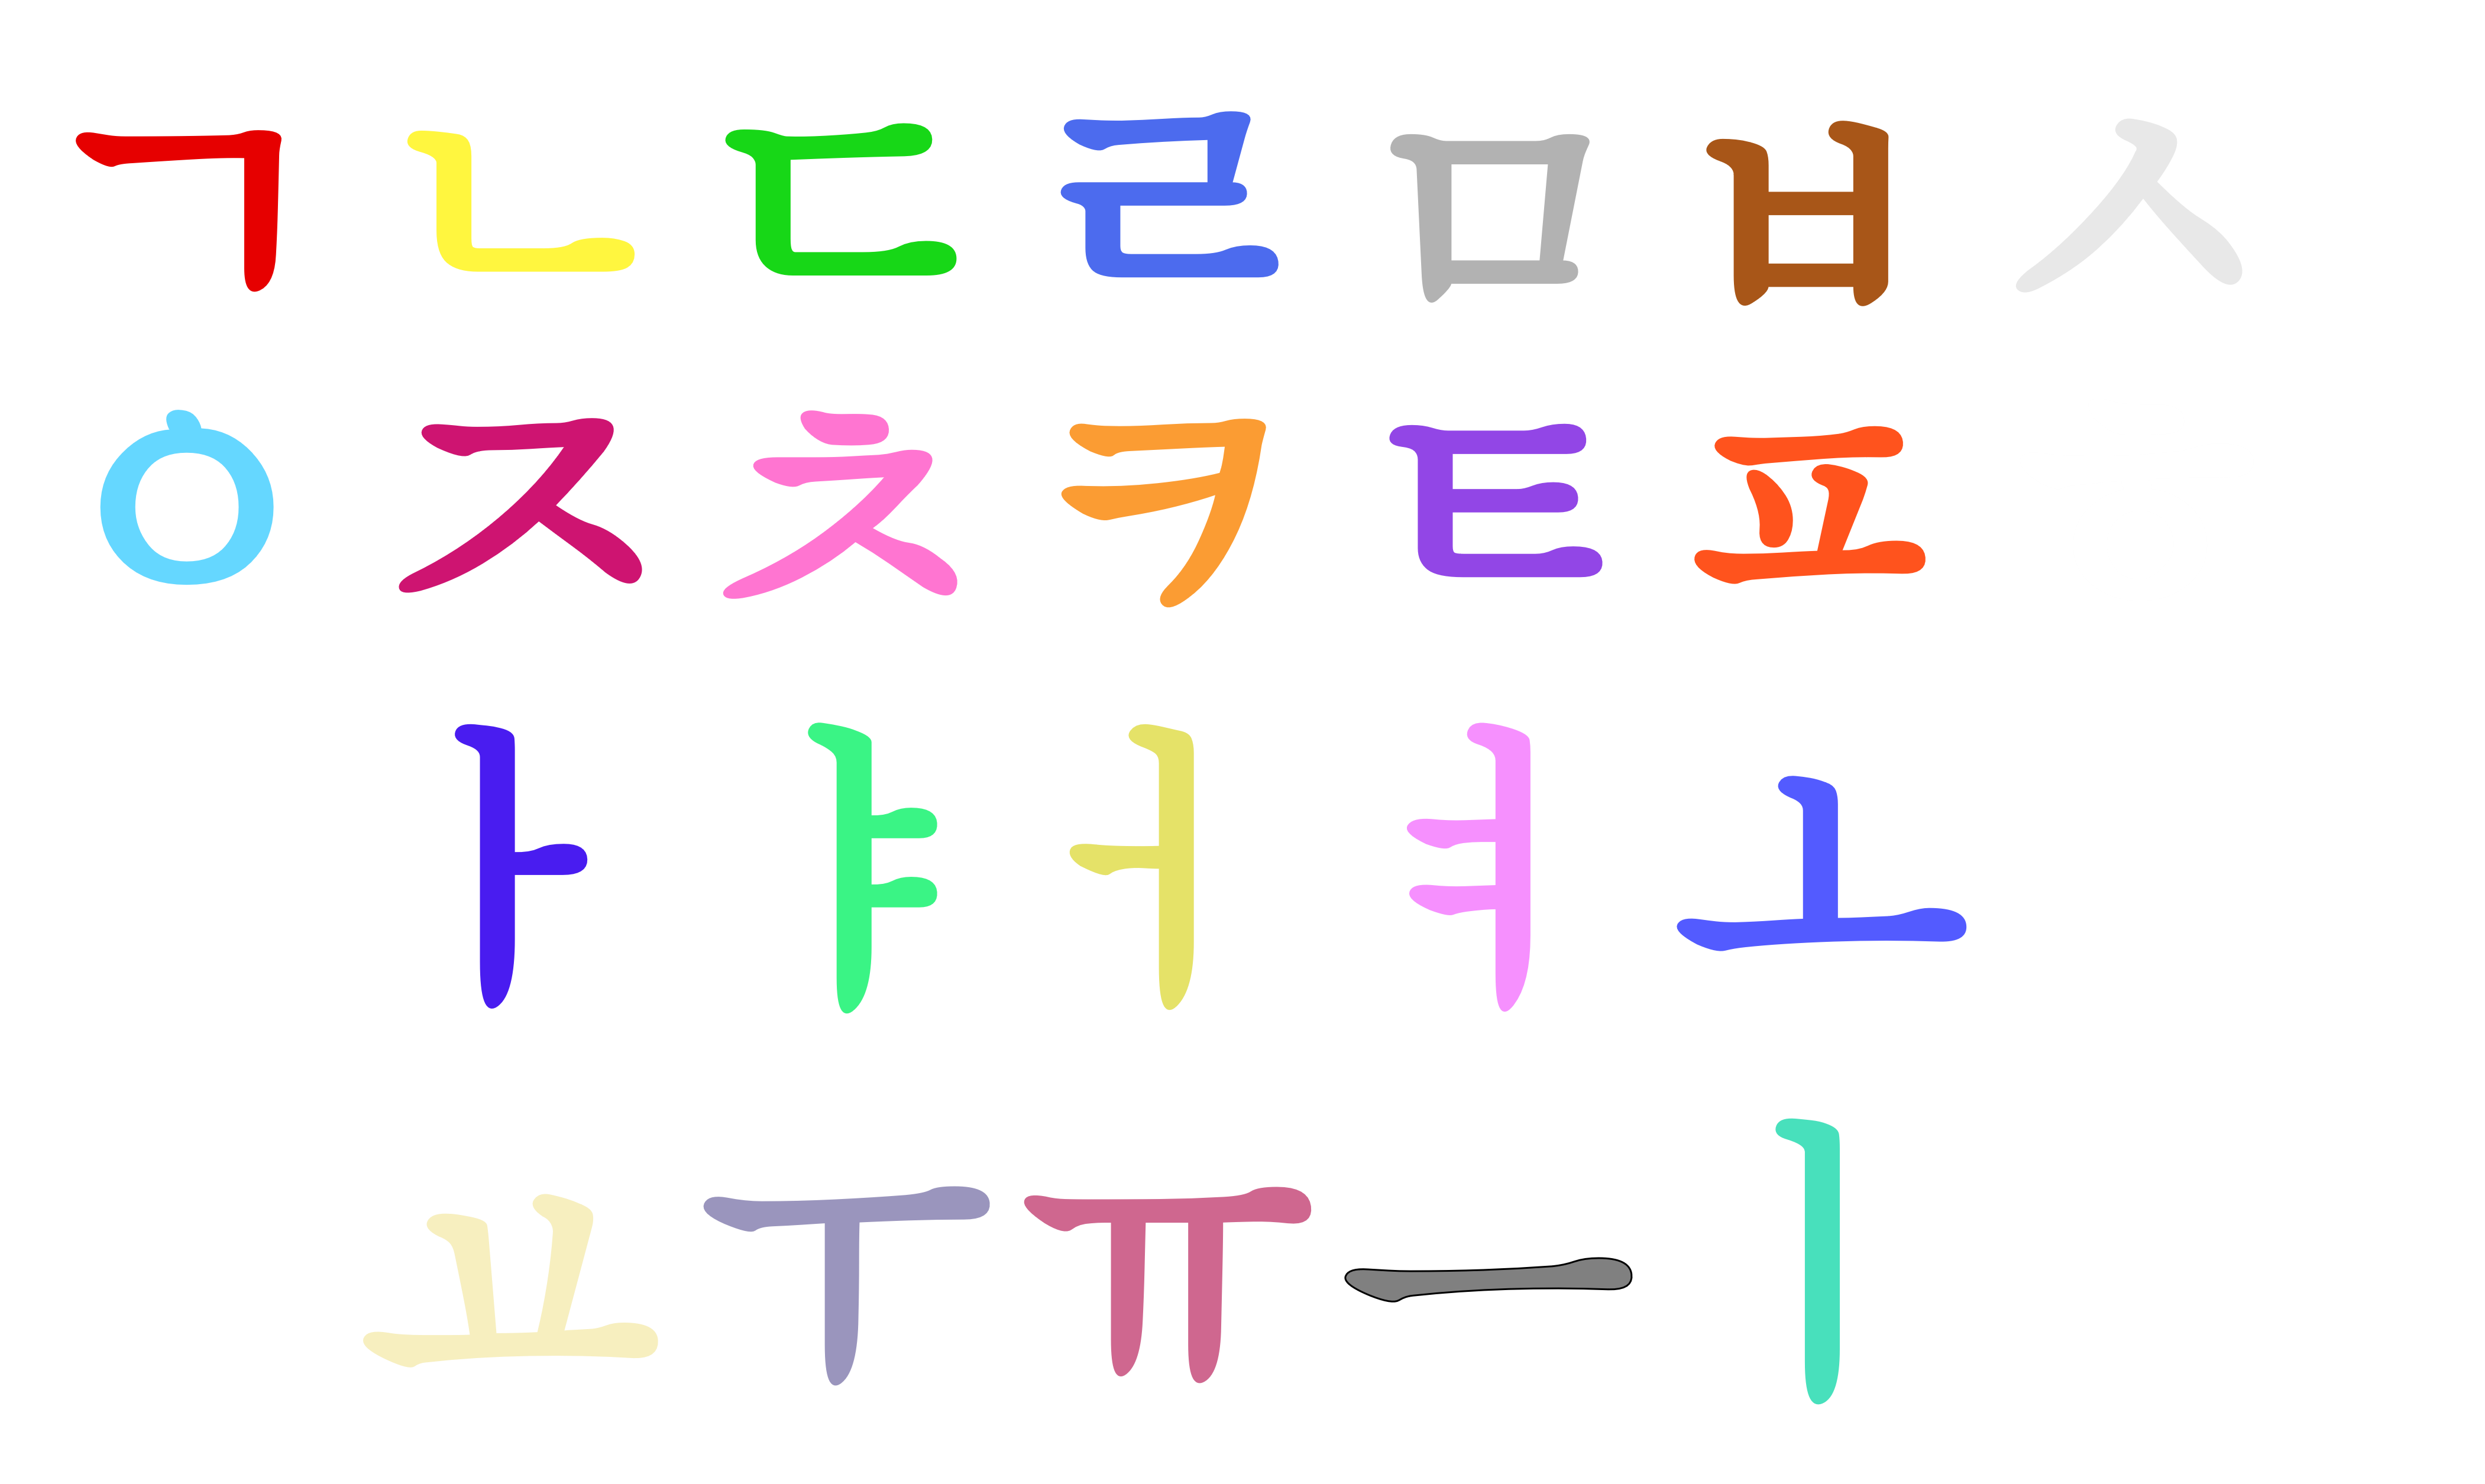 Earth System Ukrainian Alphabet by yesideaart27 on DeviantArt